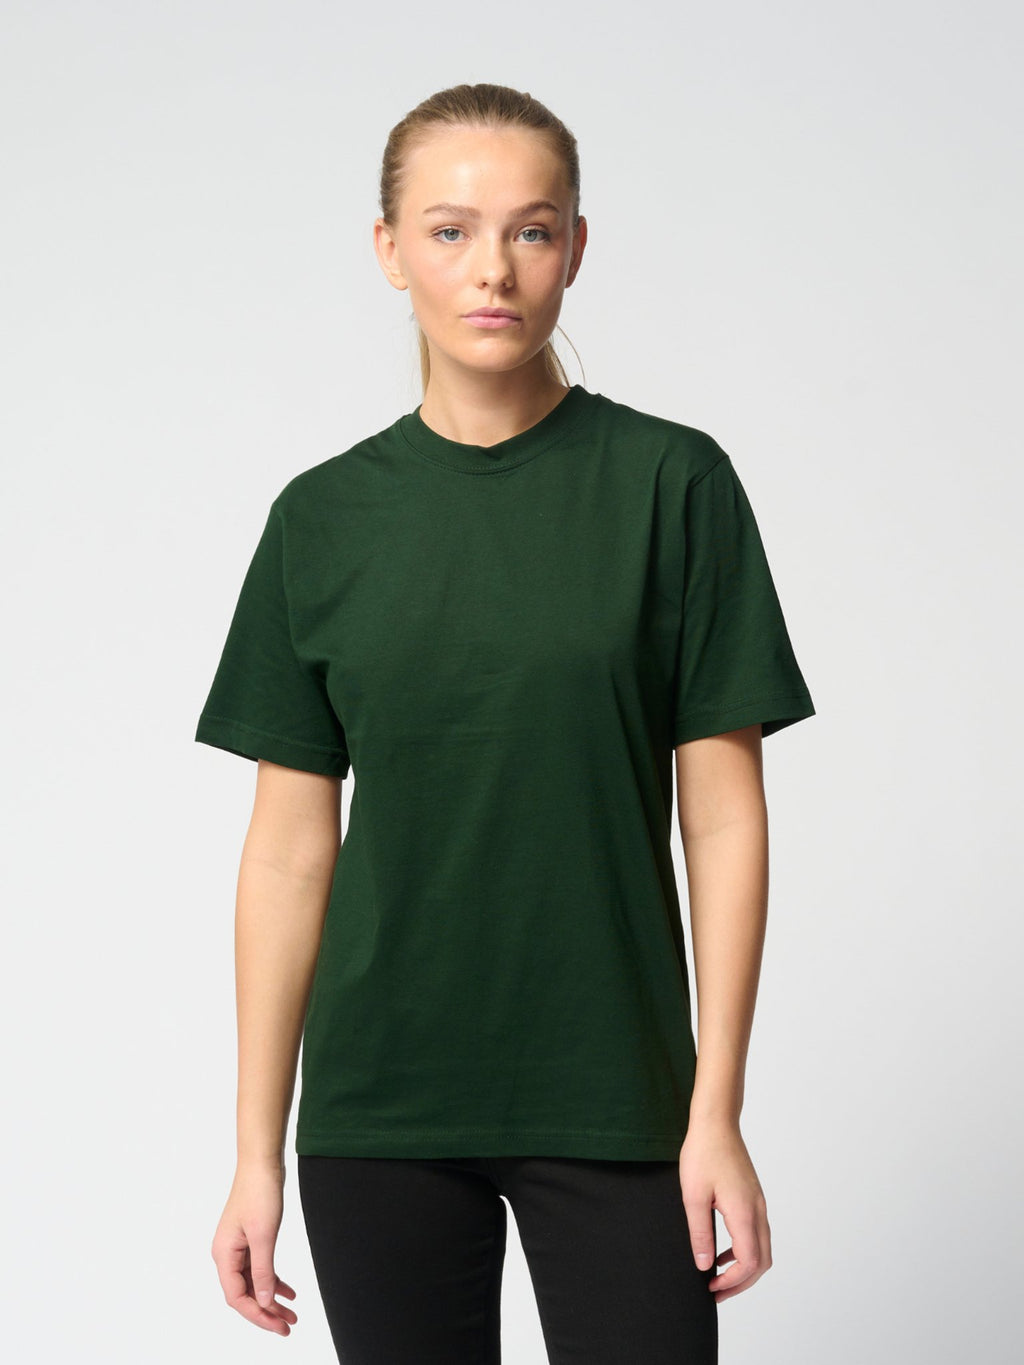 Camiseta de gran tamaño - Botella verde